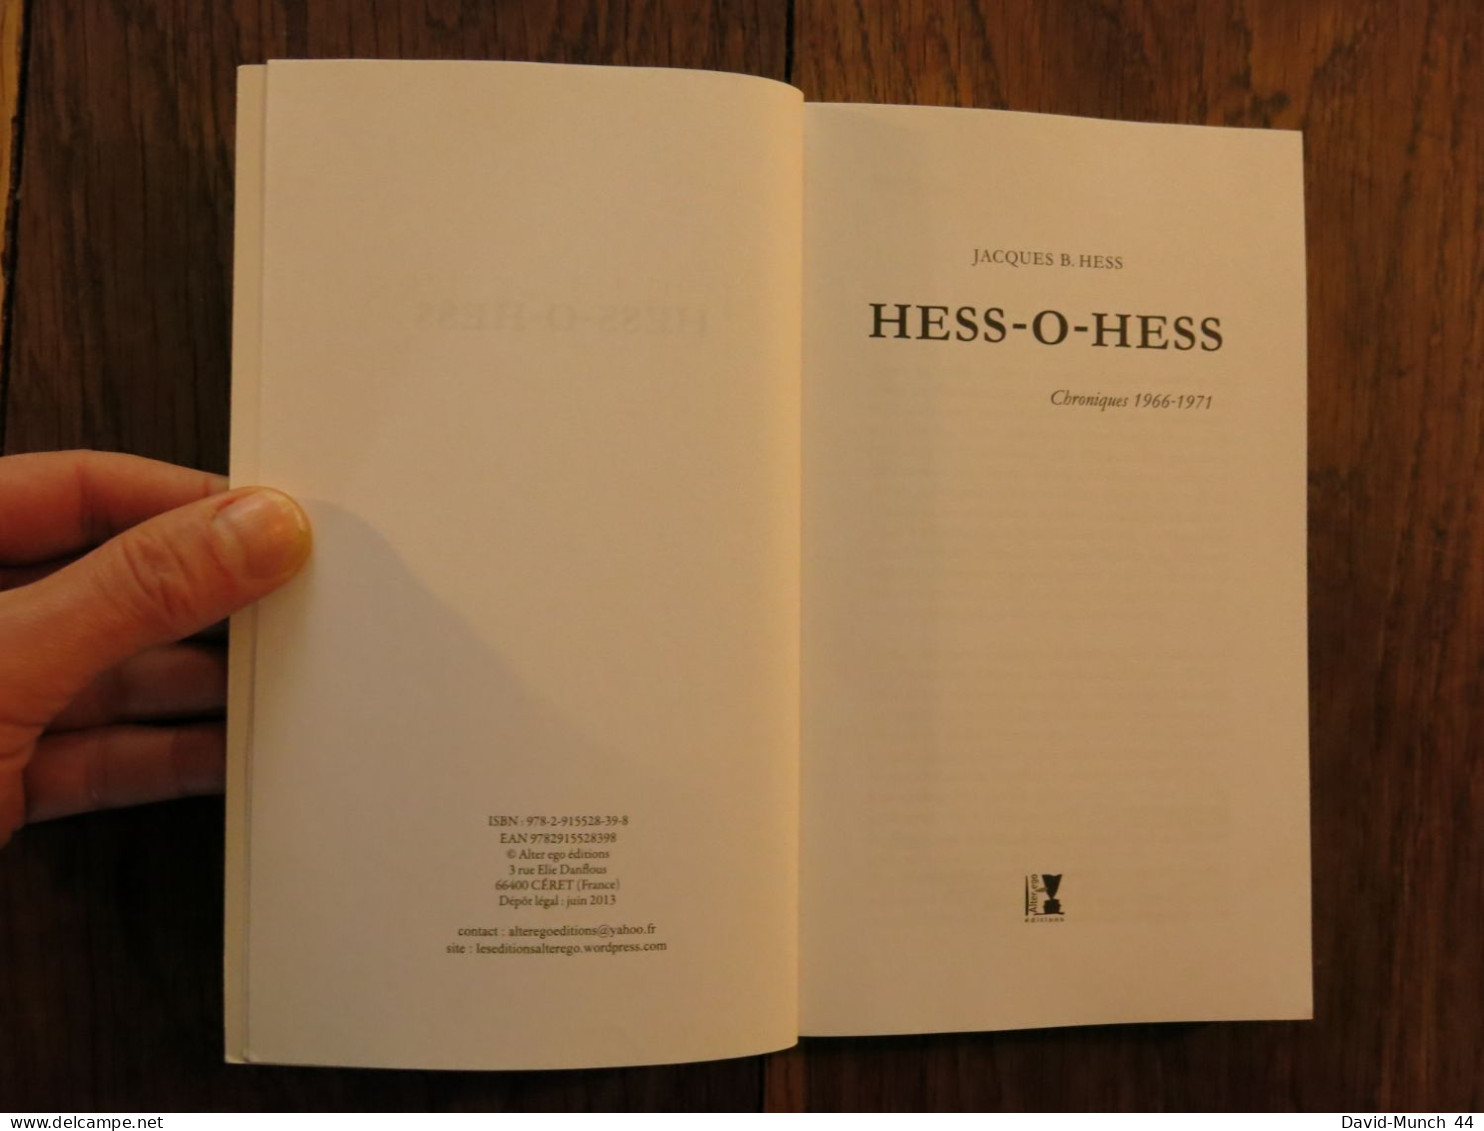 Hess-O-Hess, Chroniques 1966-1971 De Jacques B. Hess. Alter Ego éditions, Jazz Impressions. 2013 - Musique